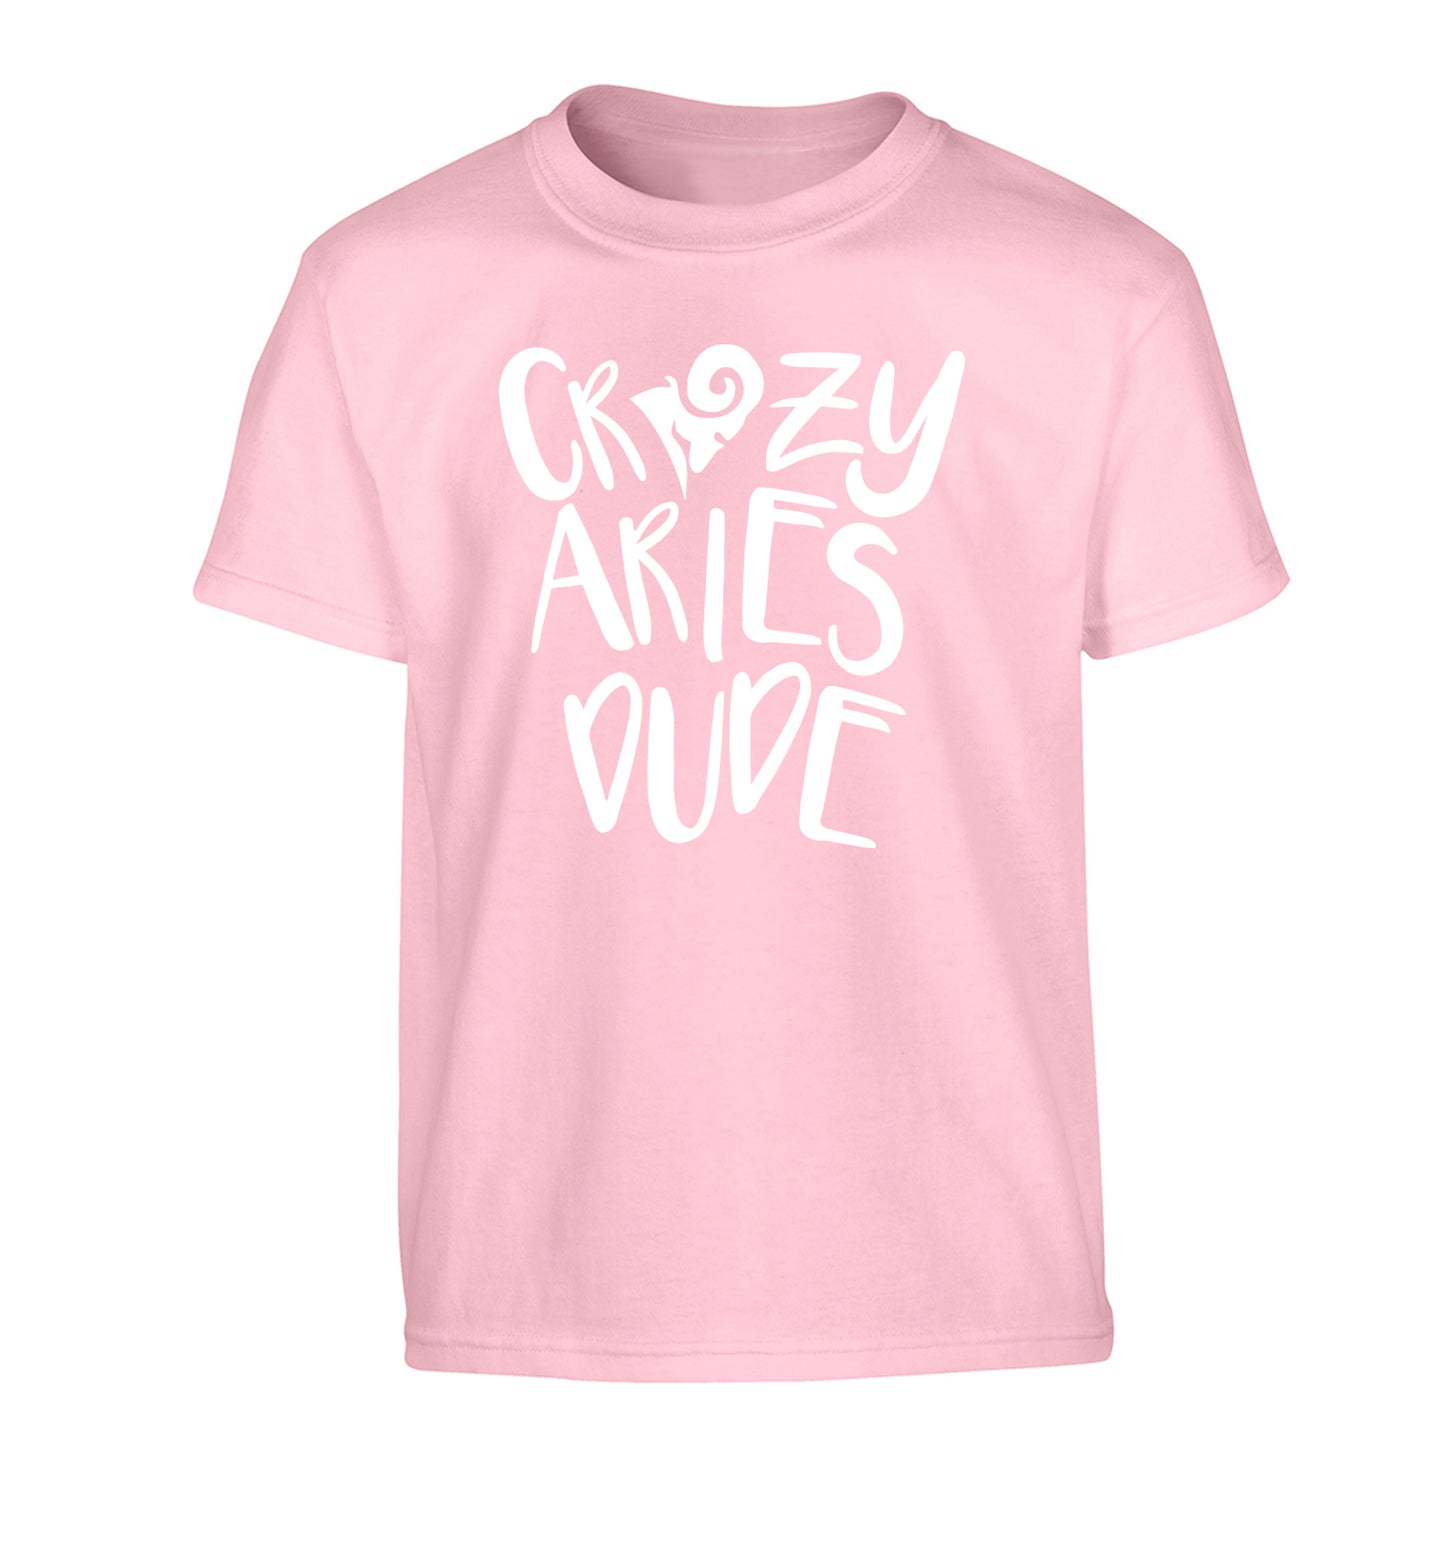 Crazy aries dude Children's light pink Tshirt 12-13 Years